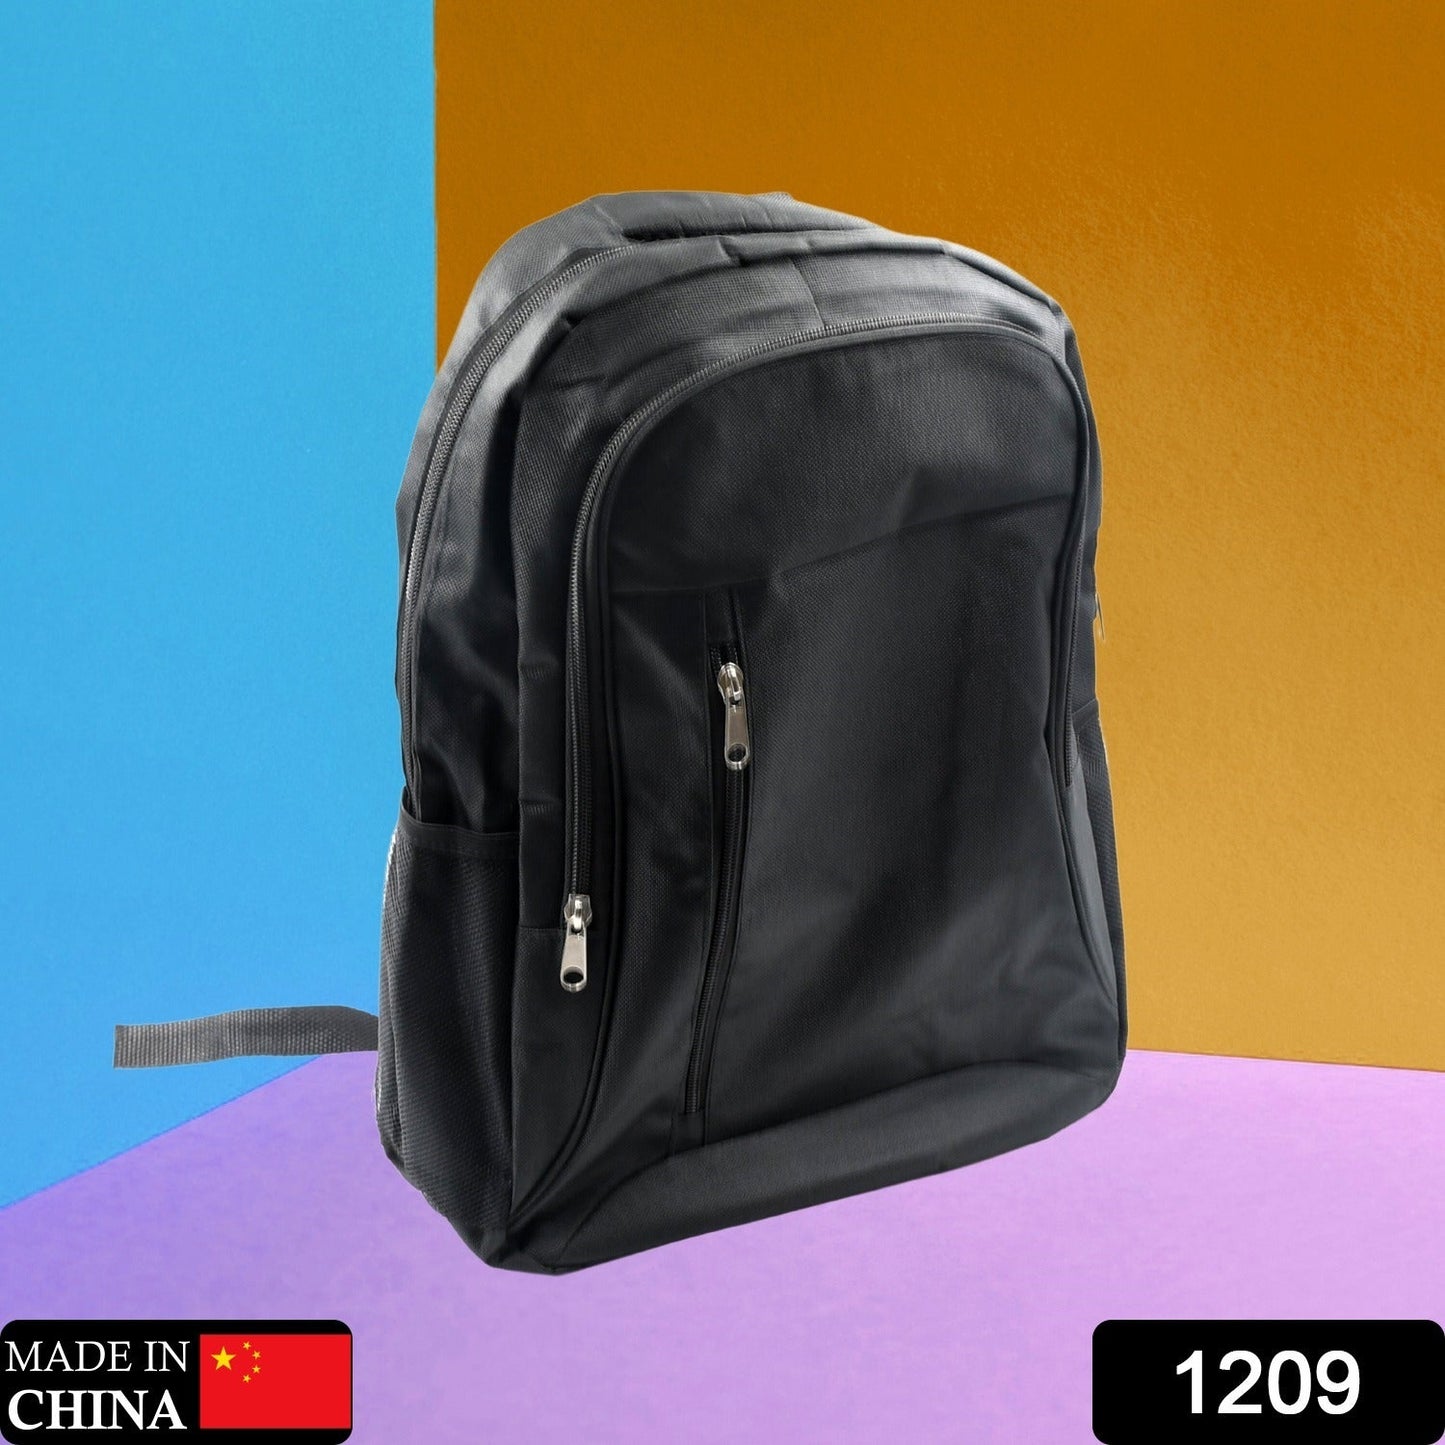 1209 Laptop Backpack Polyester Laptop Backpack Slim Durable Laptop Backpack Water Resistant College Bag Computer Bag Gifts for Men & Women